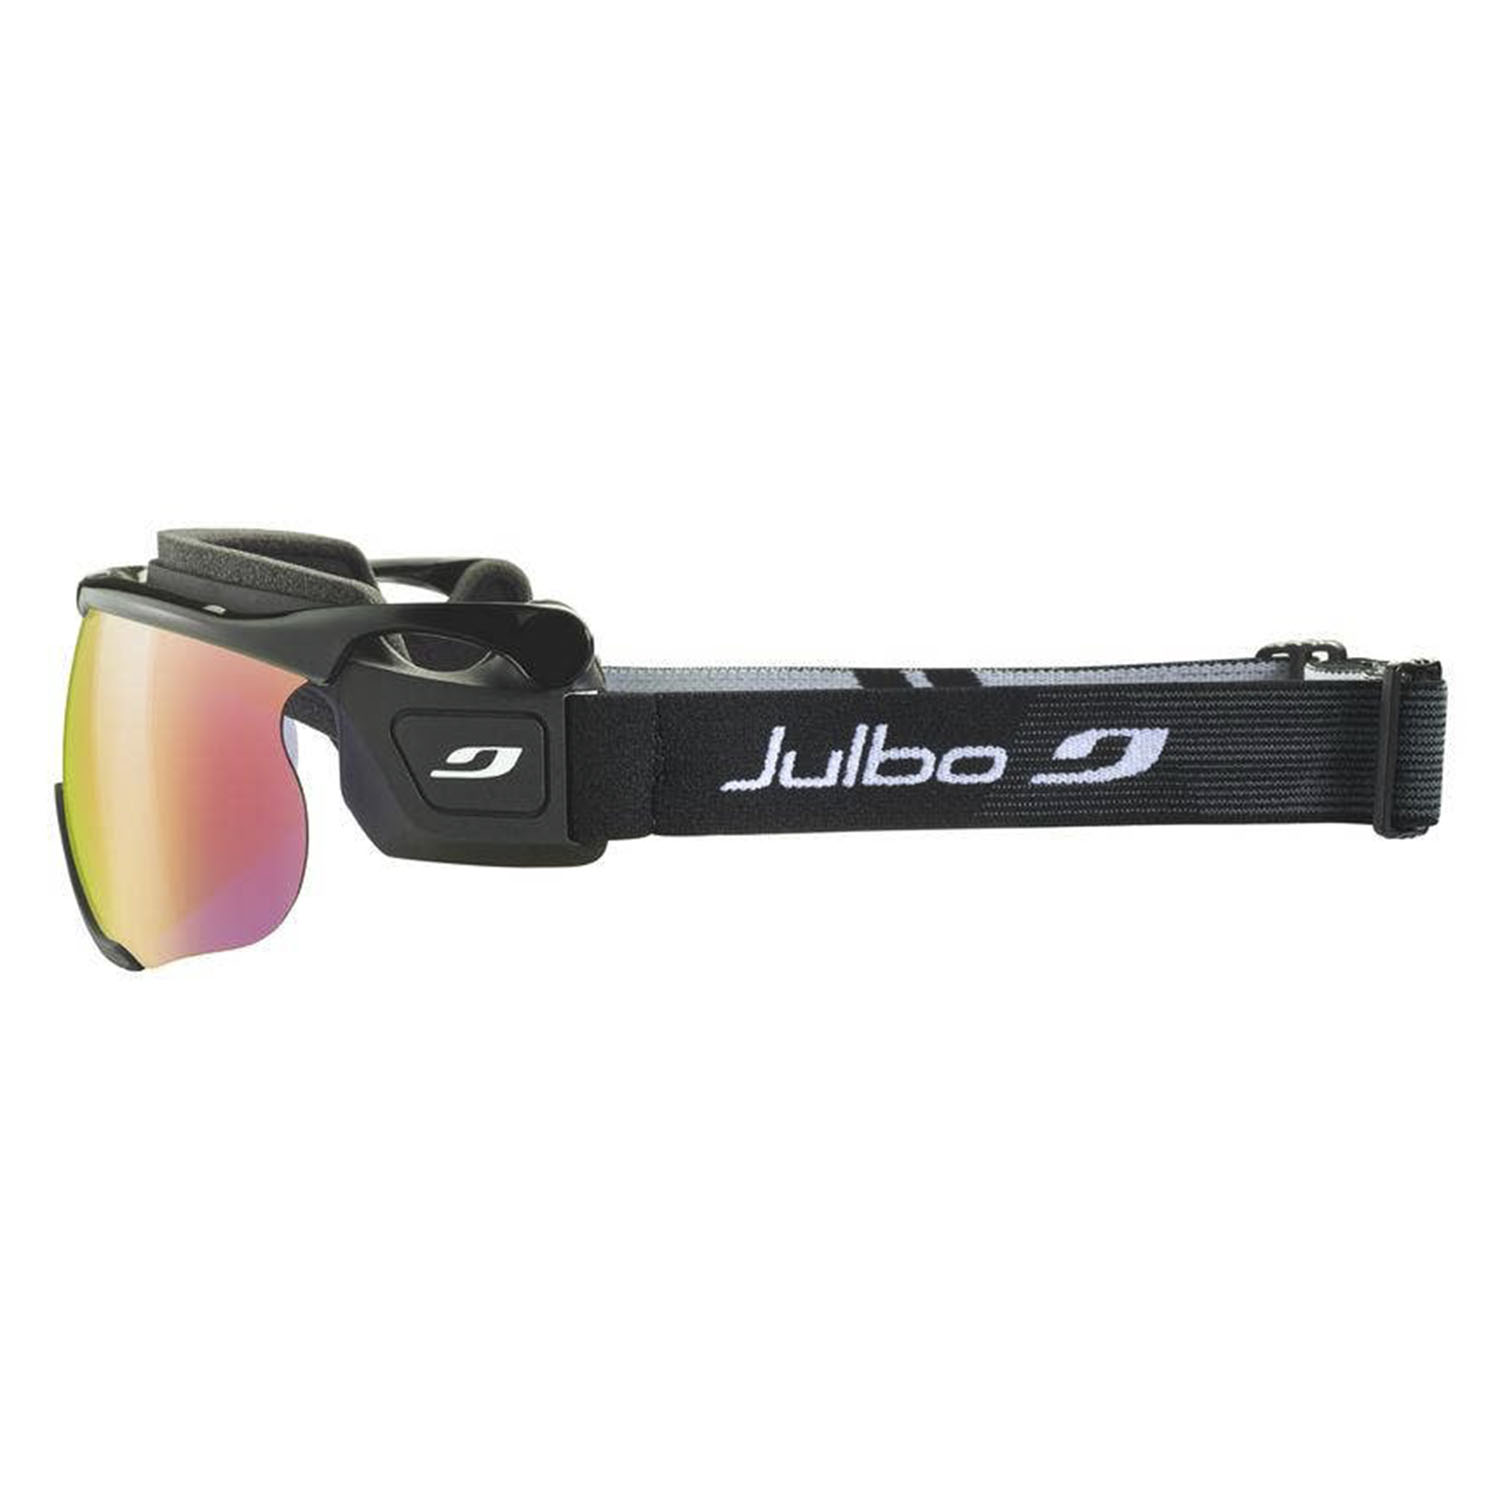 Визор для беговых лыж Julbo Sniper Evo M Black/Reactiv 1-3 High Contrast Flash Red